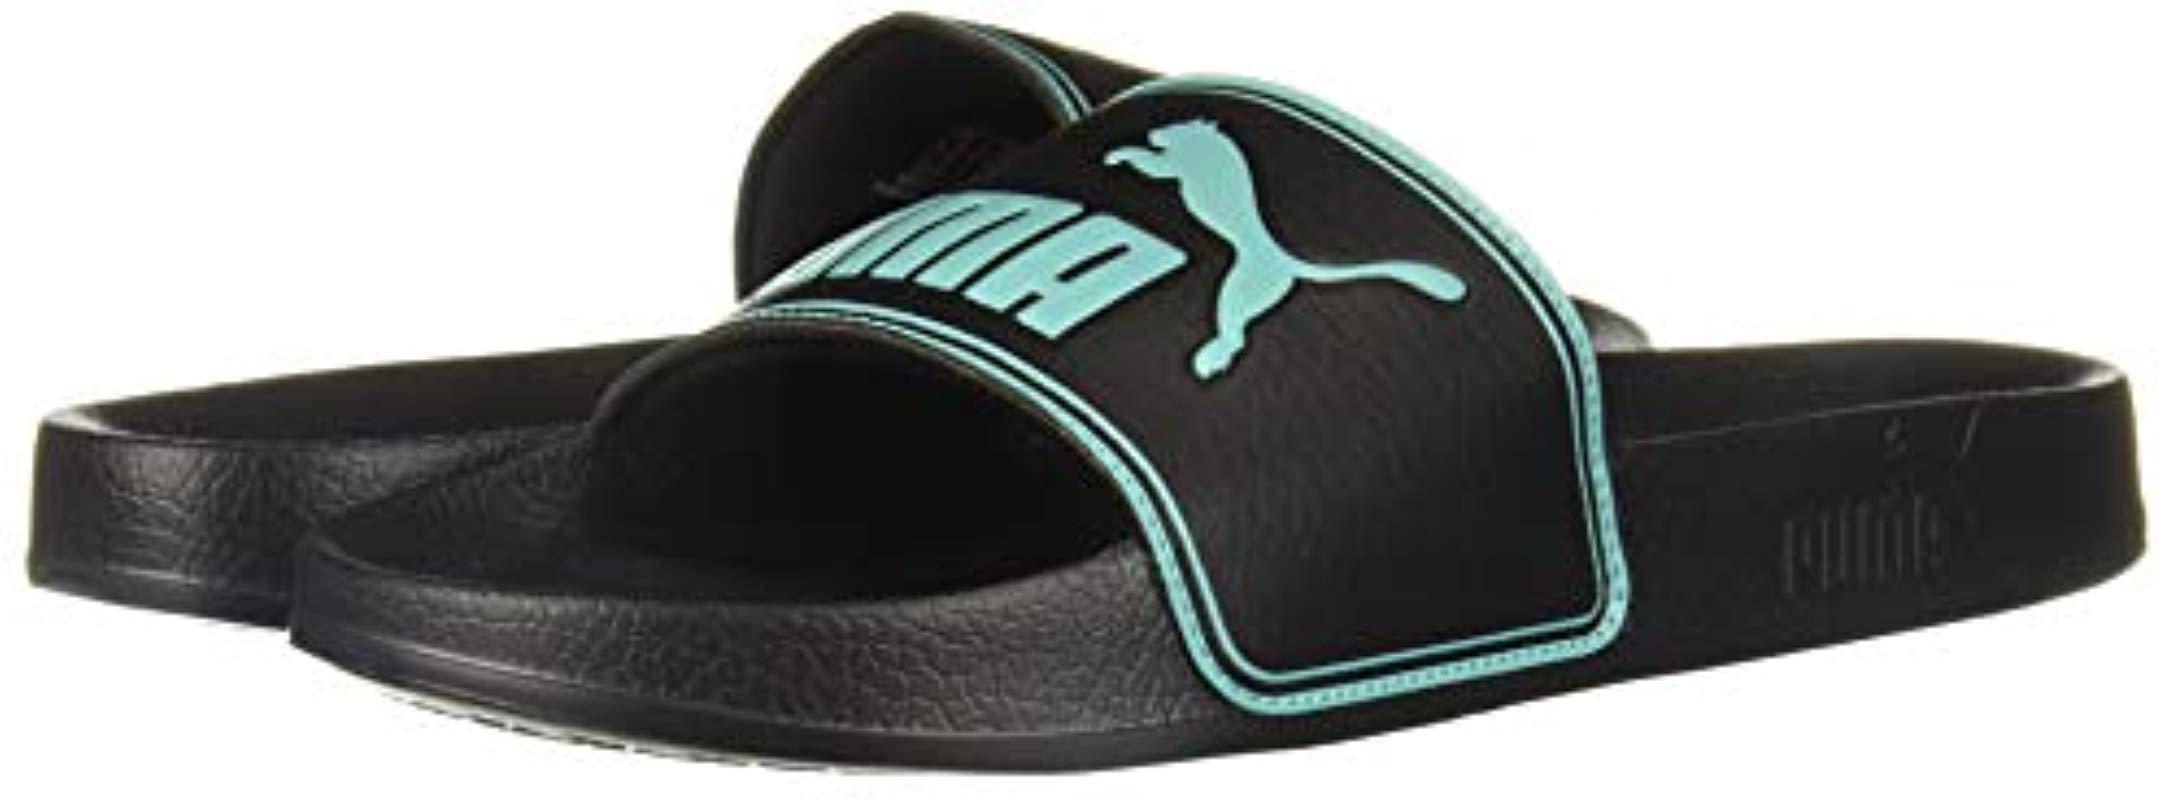 leadcat slide sandals